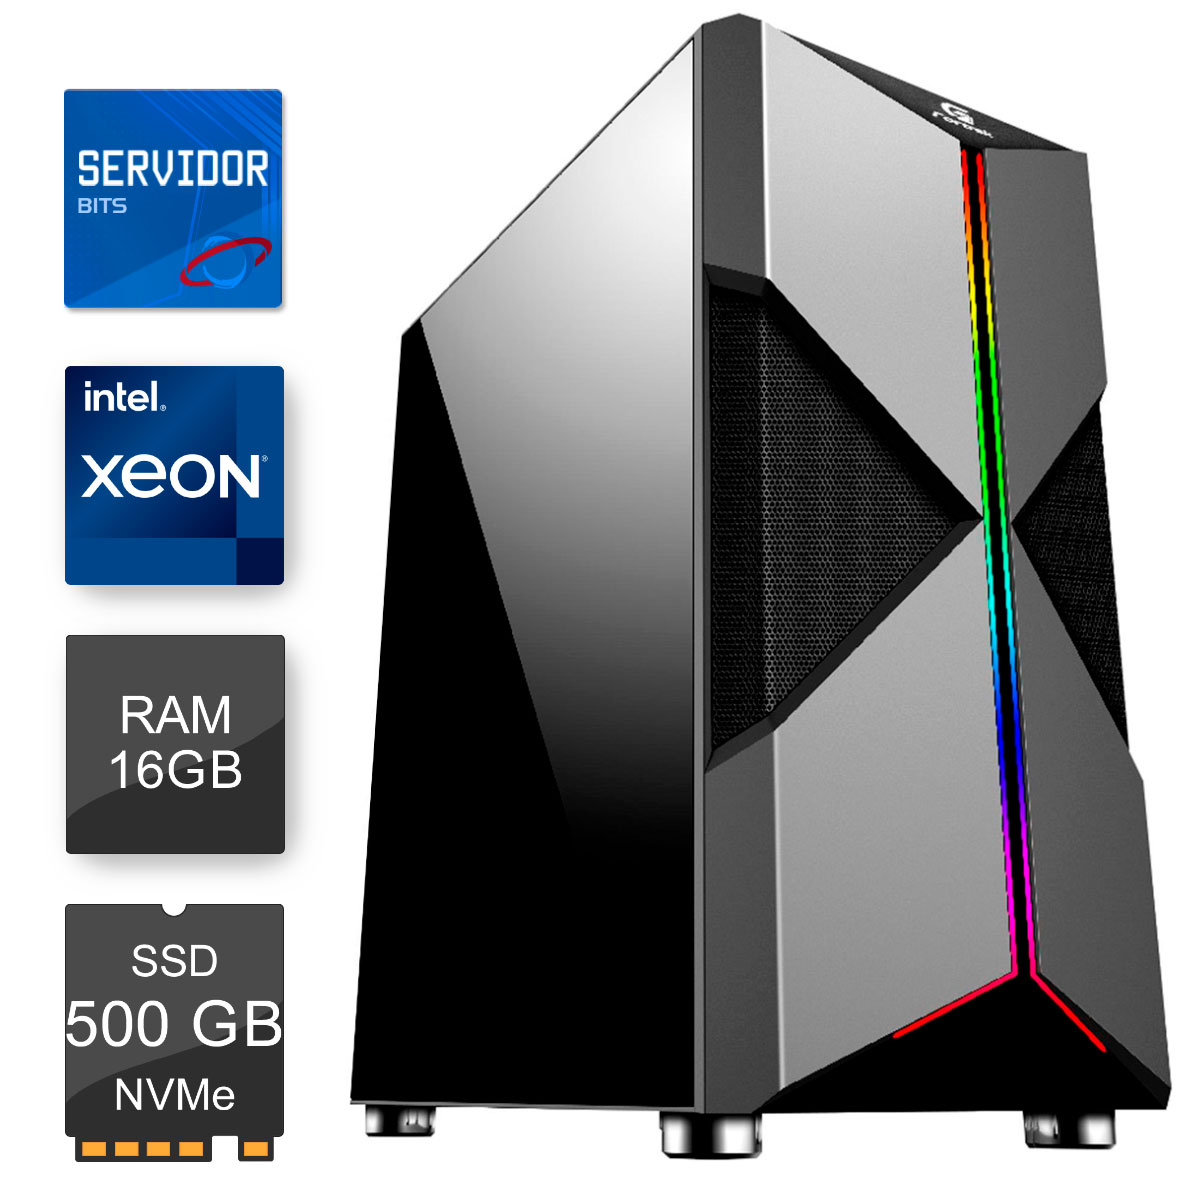 Servidor Bits 2024 - Intel® Xeon E-2324G, RAM 16GB non-ECC, SSD 500GB NVMe